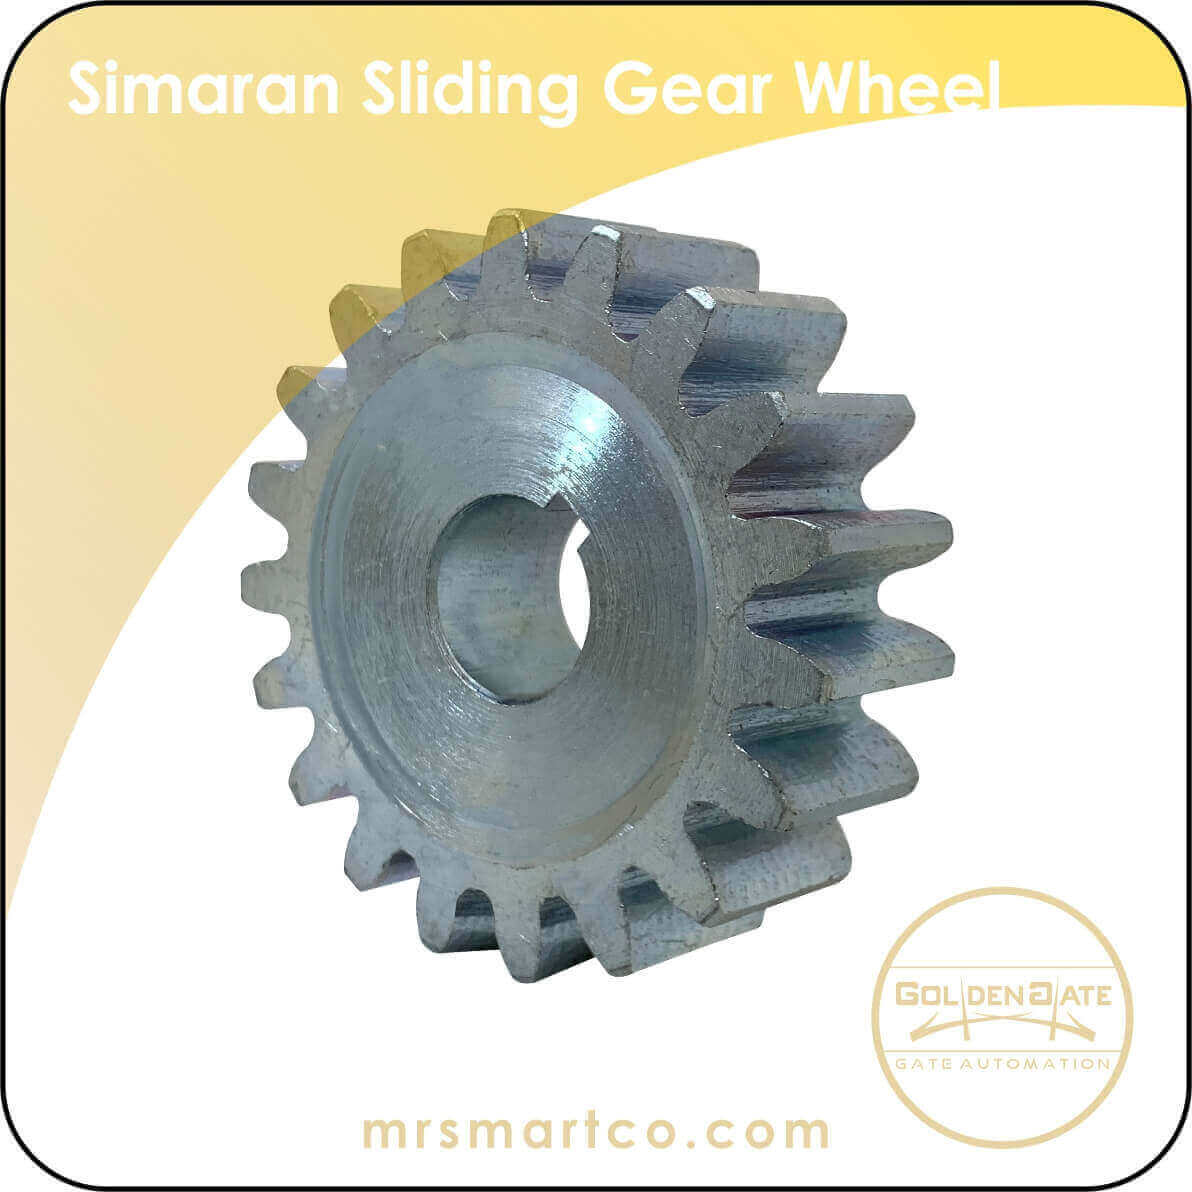 Simaran Sliding Gear Wheel